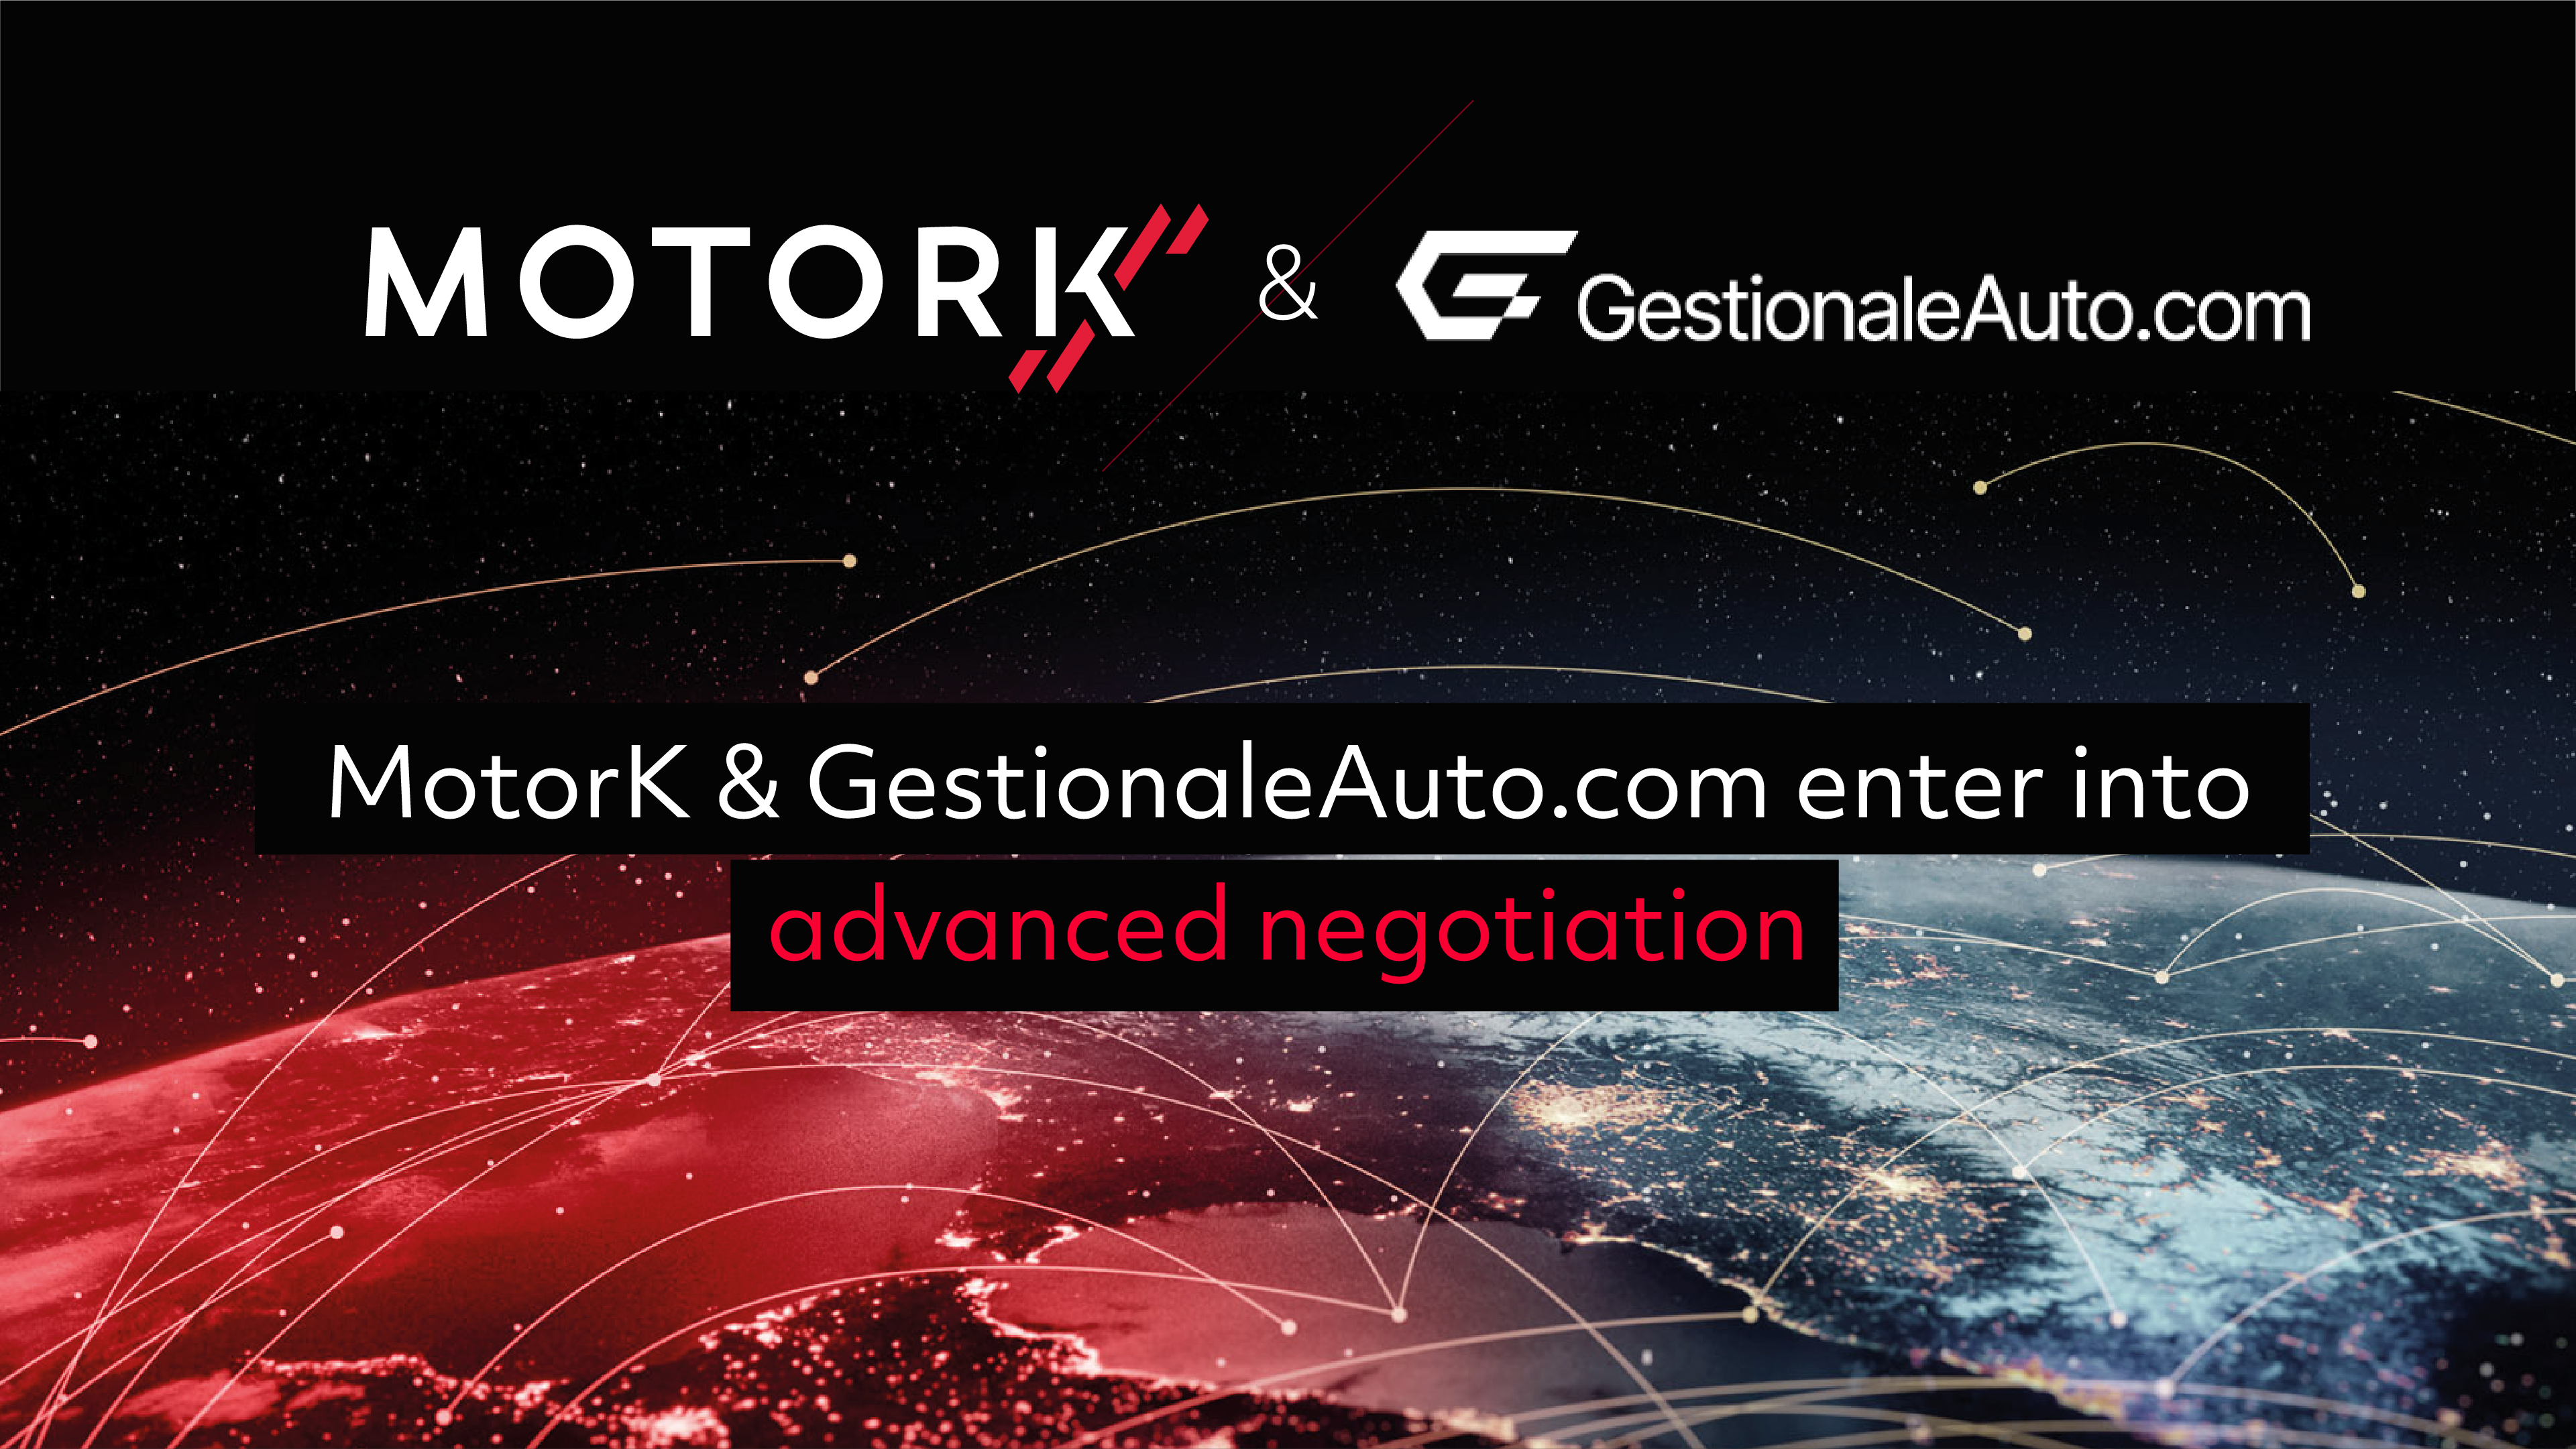 MotorK proposes acquisition of GestionaleAuto.com